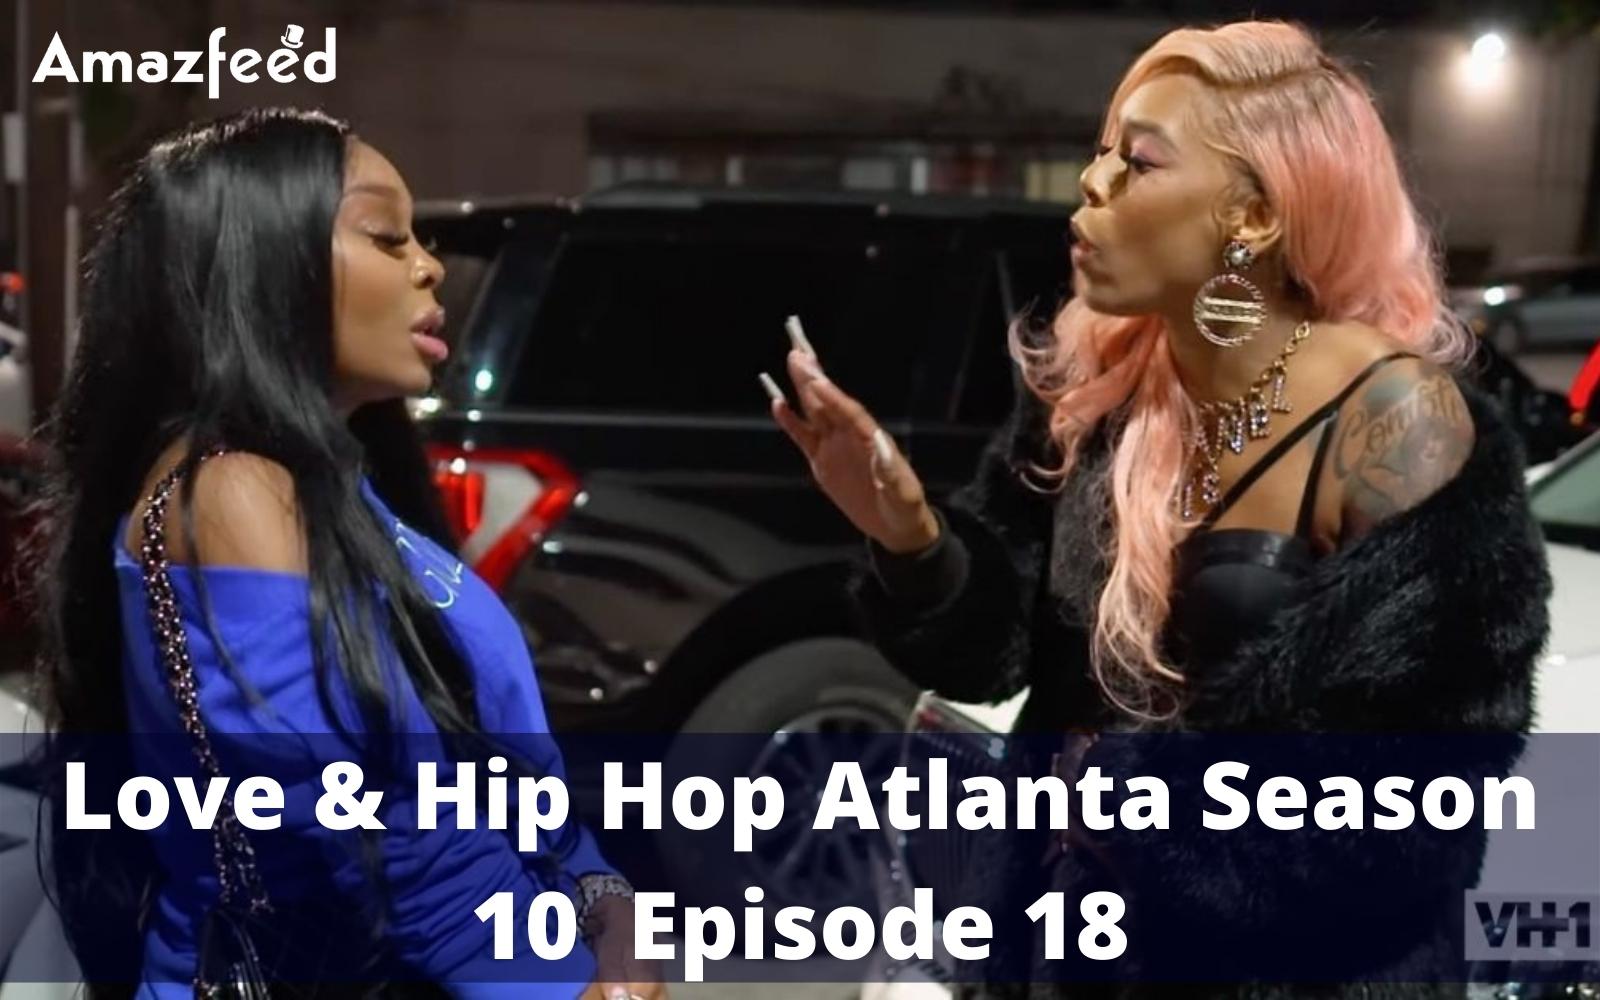 Love & Hip Hop Atlanta Season 10 Episode 18 : Countdown, Release Date, Recap, Spoiler, Teaser